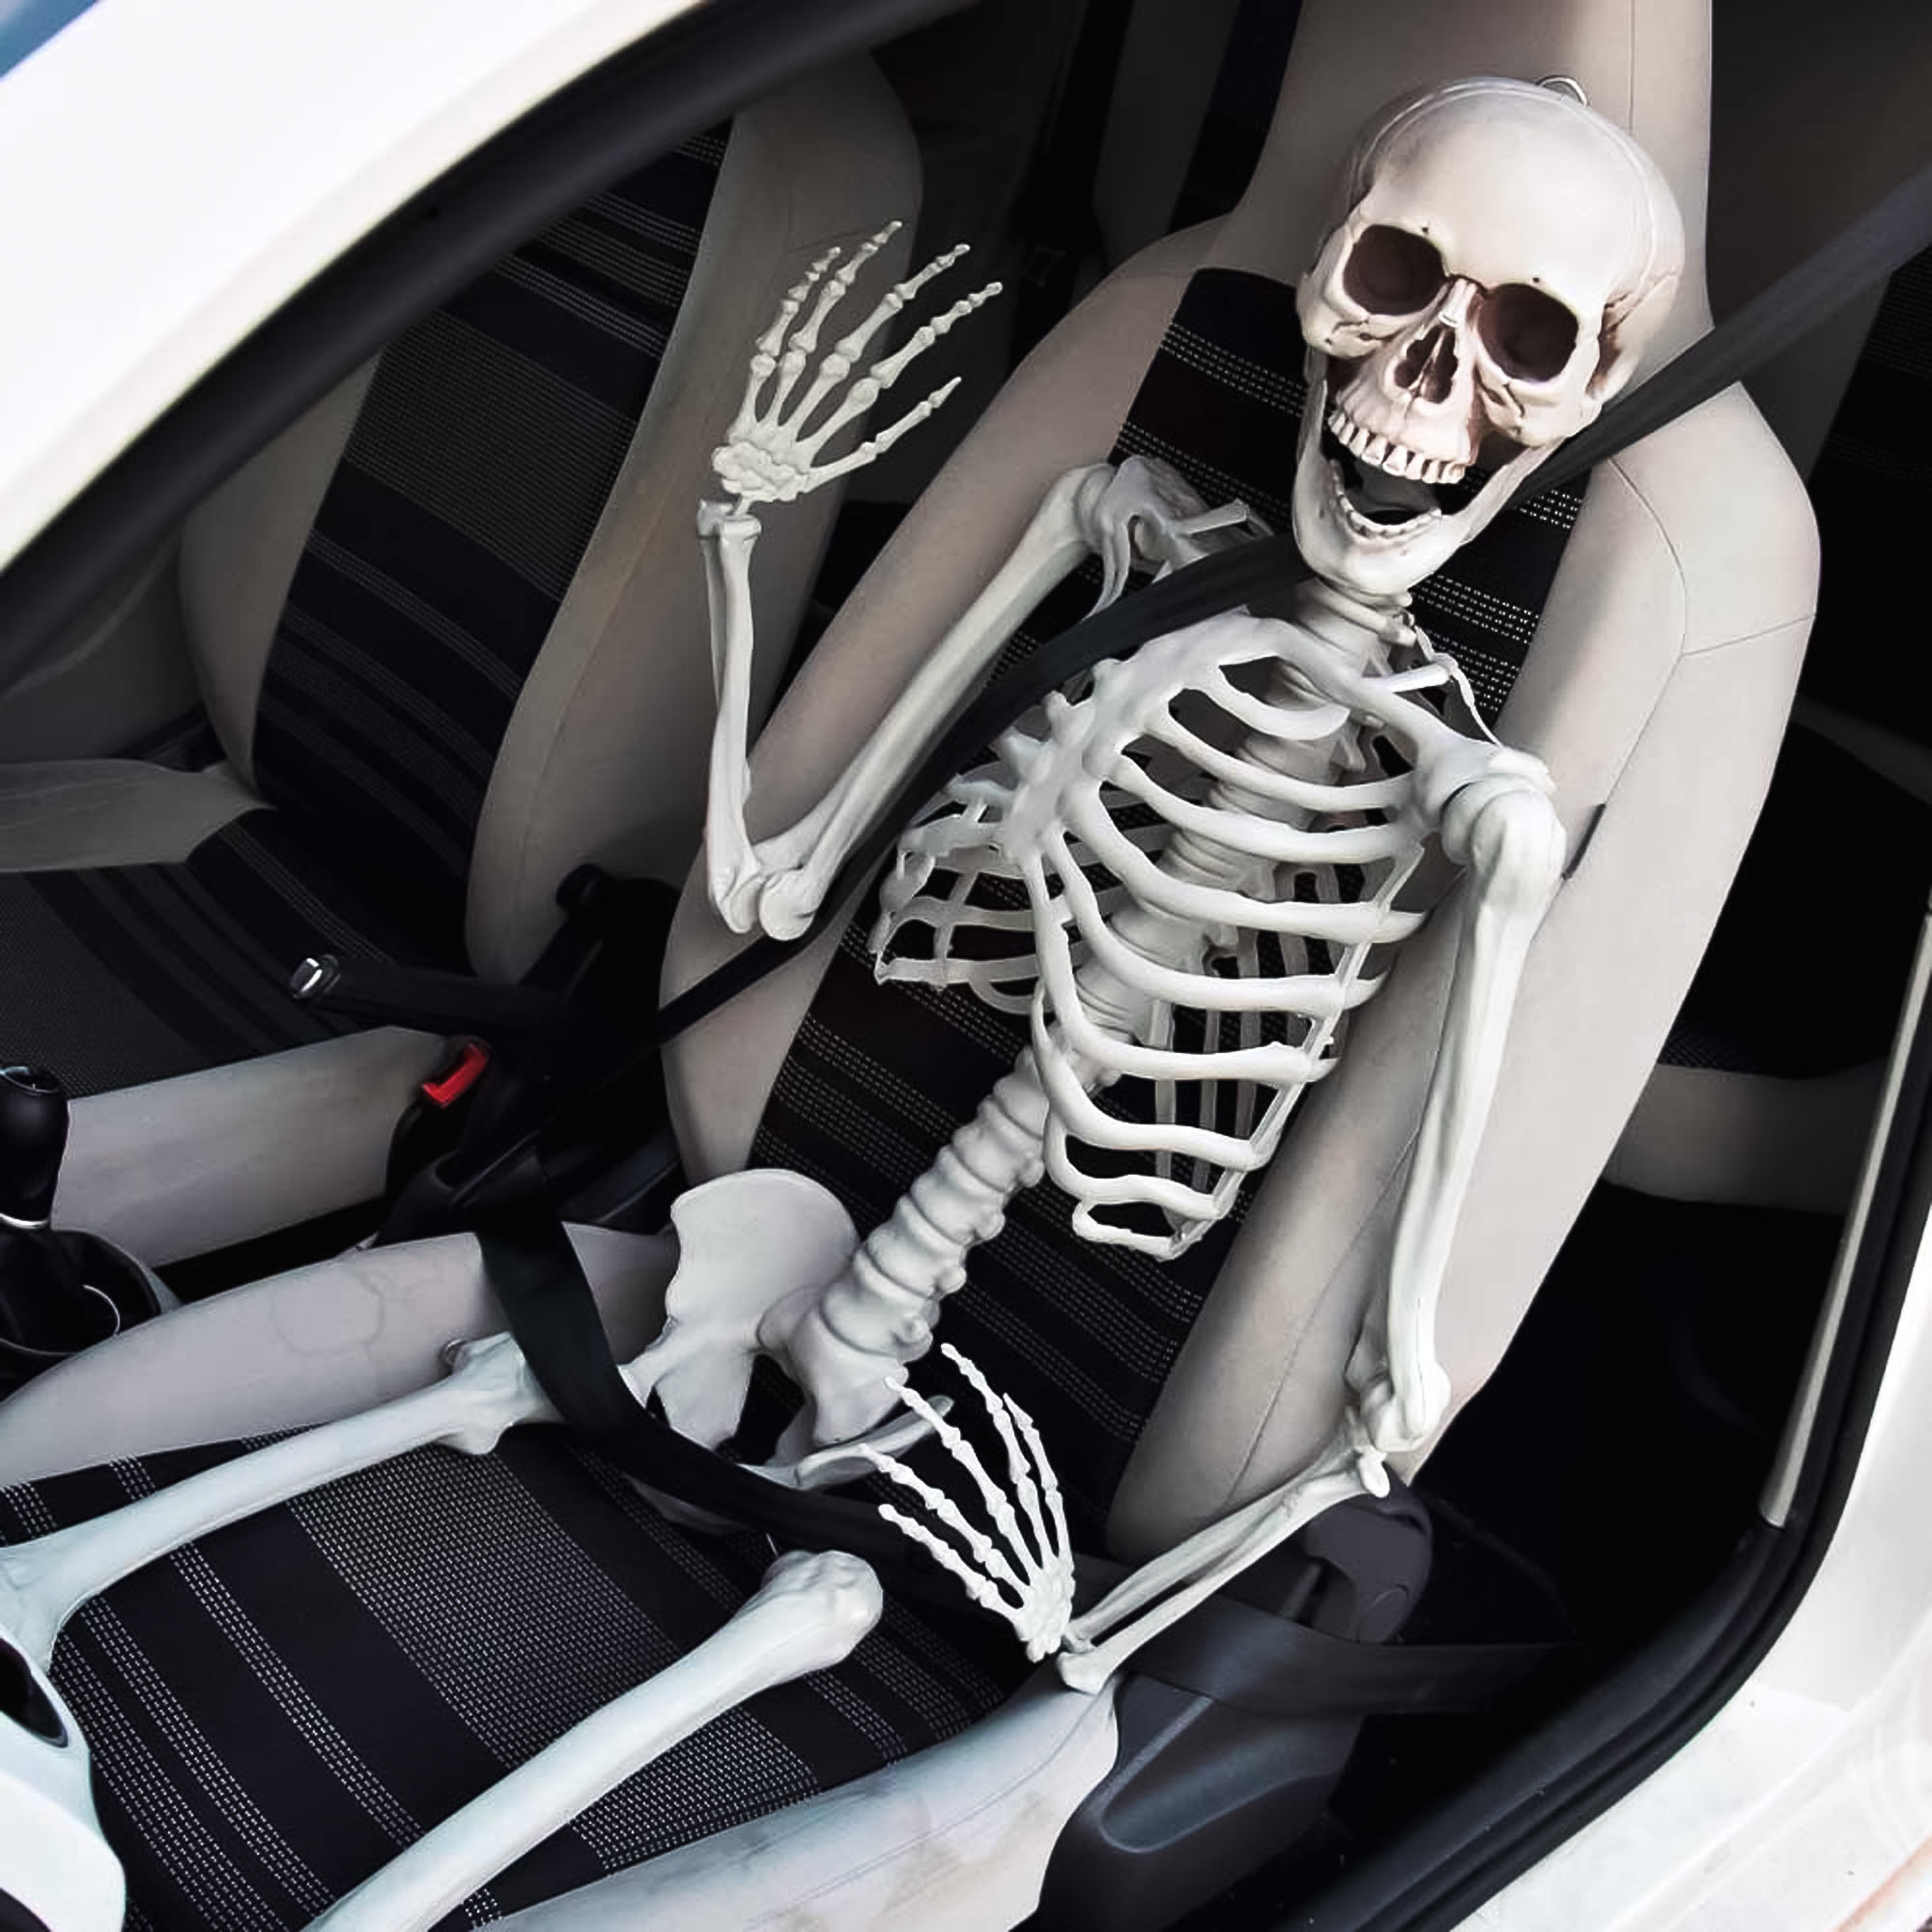 Lebensgroßes Skelett - Gruselige Deko Figur für Halloween